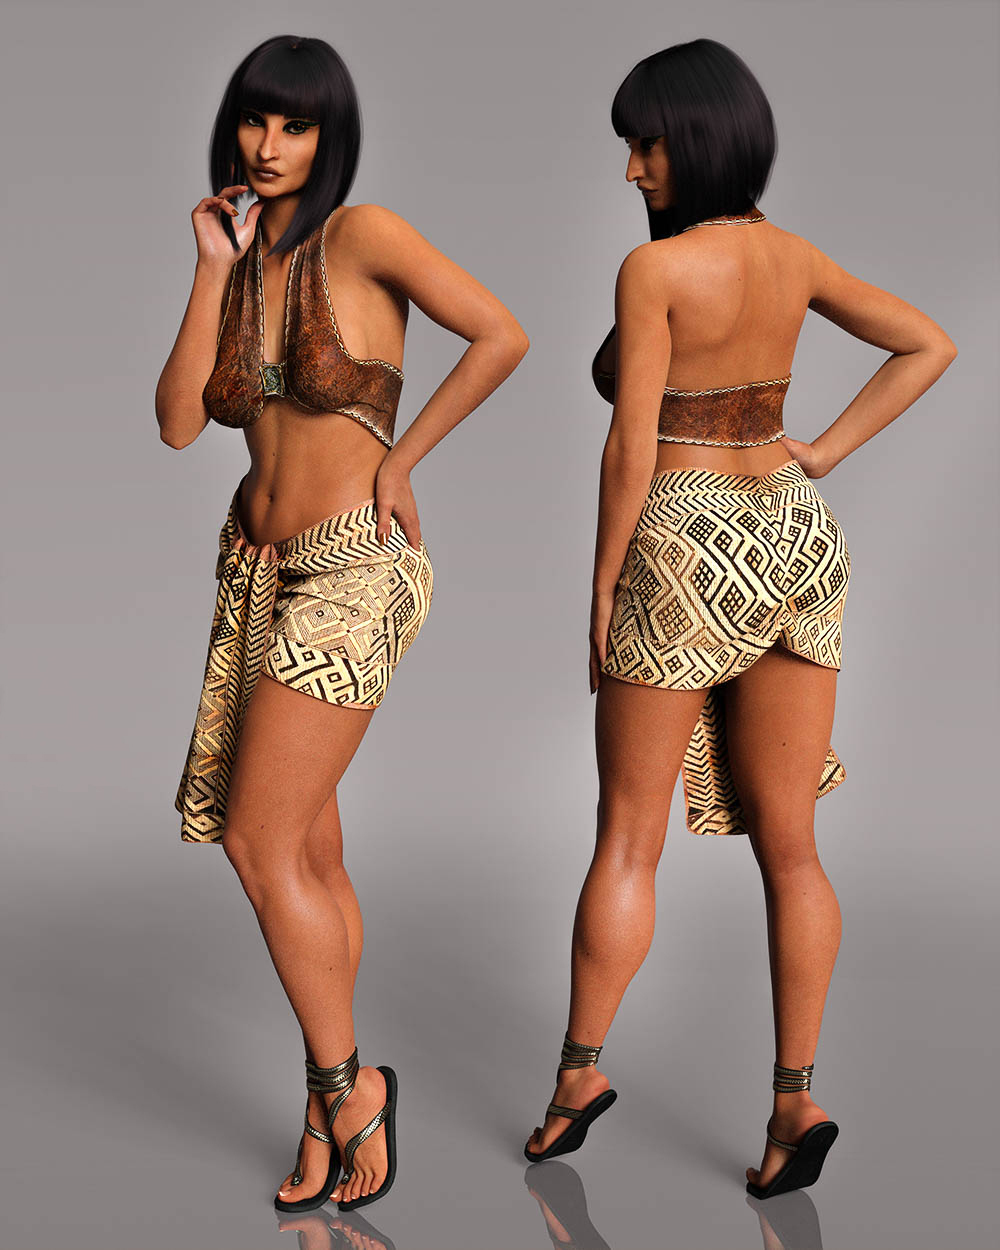 Nailah for Genesis 8 Female by: TwiztedMetal, 3D Models by Daz 3D